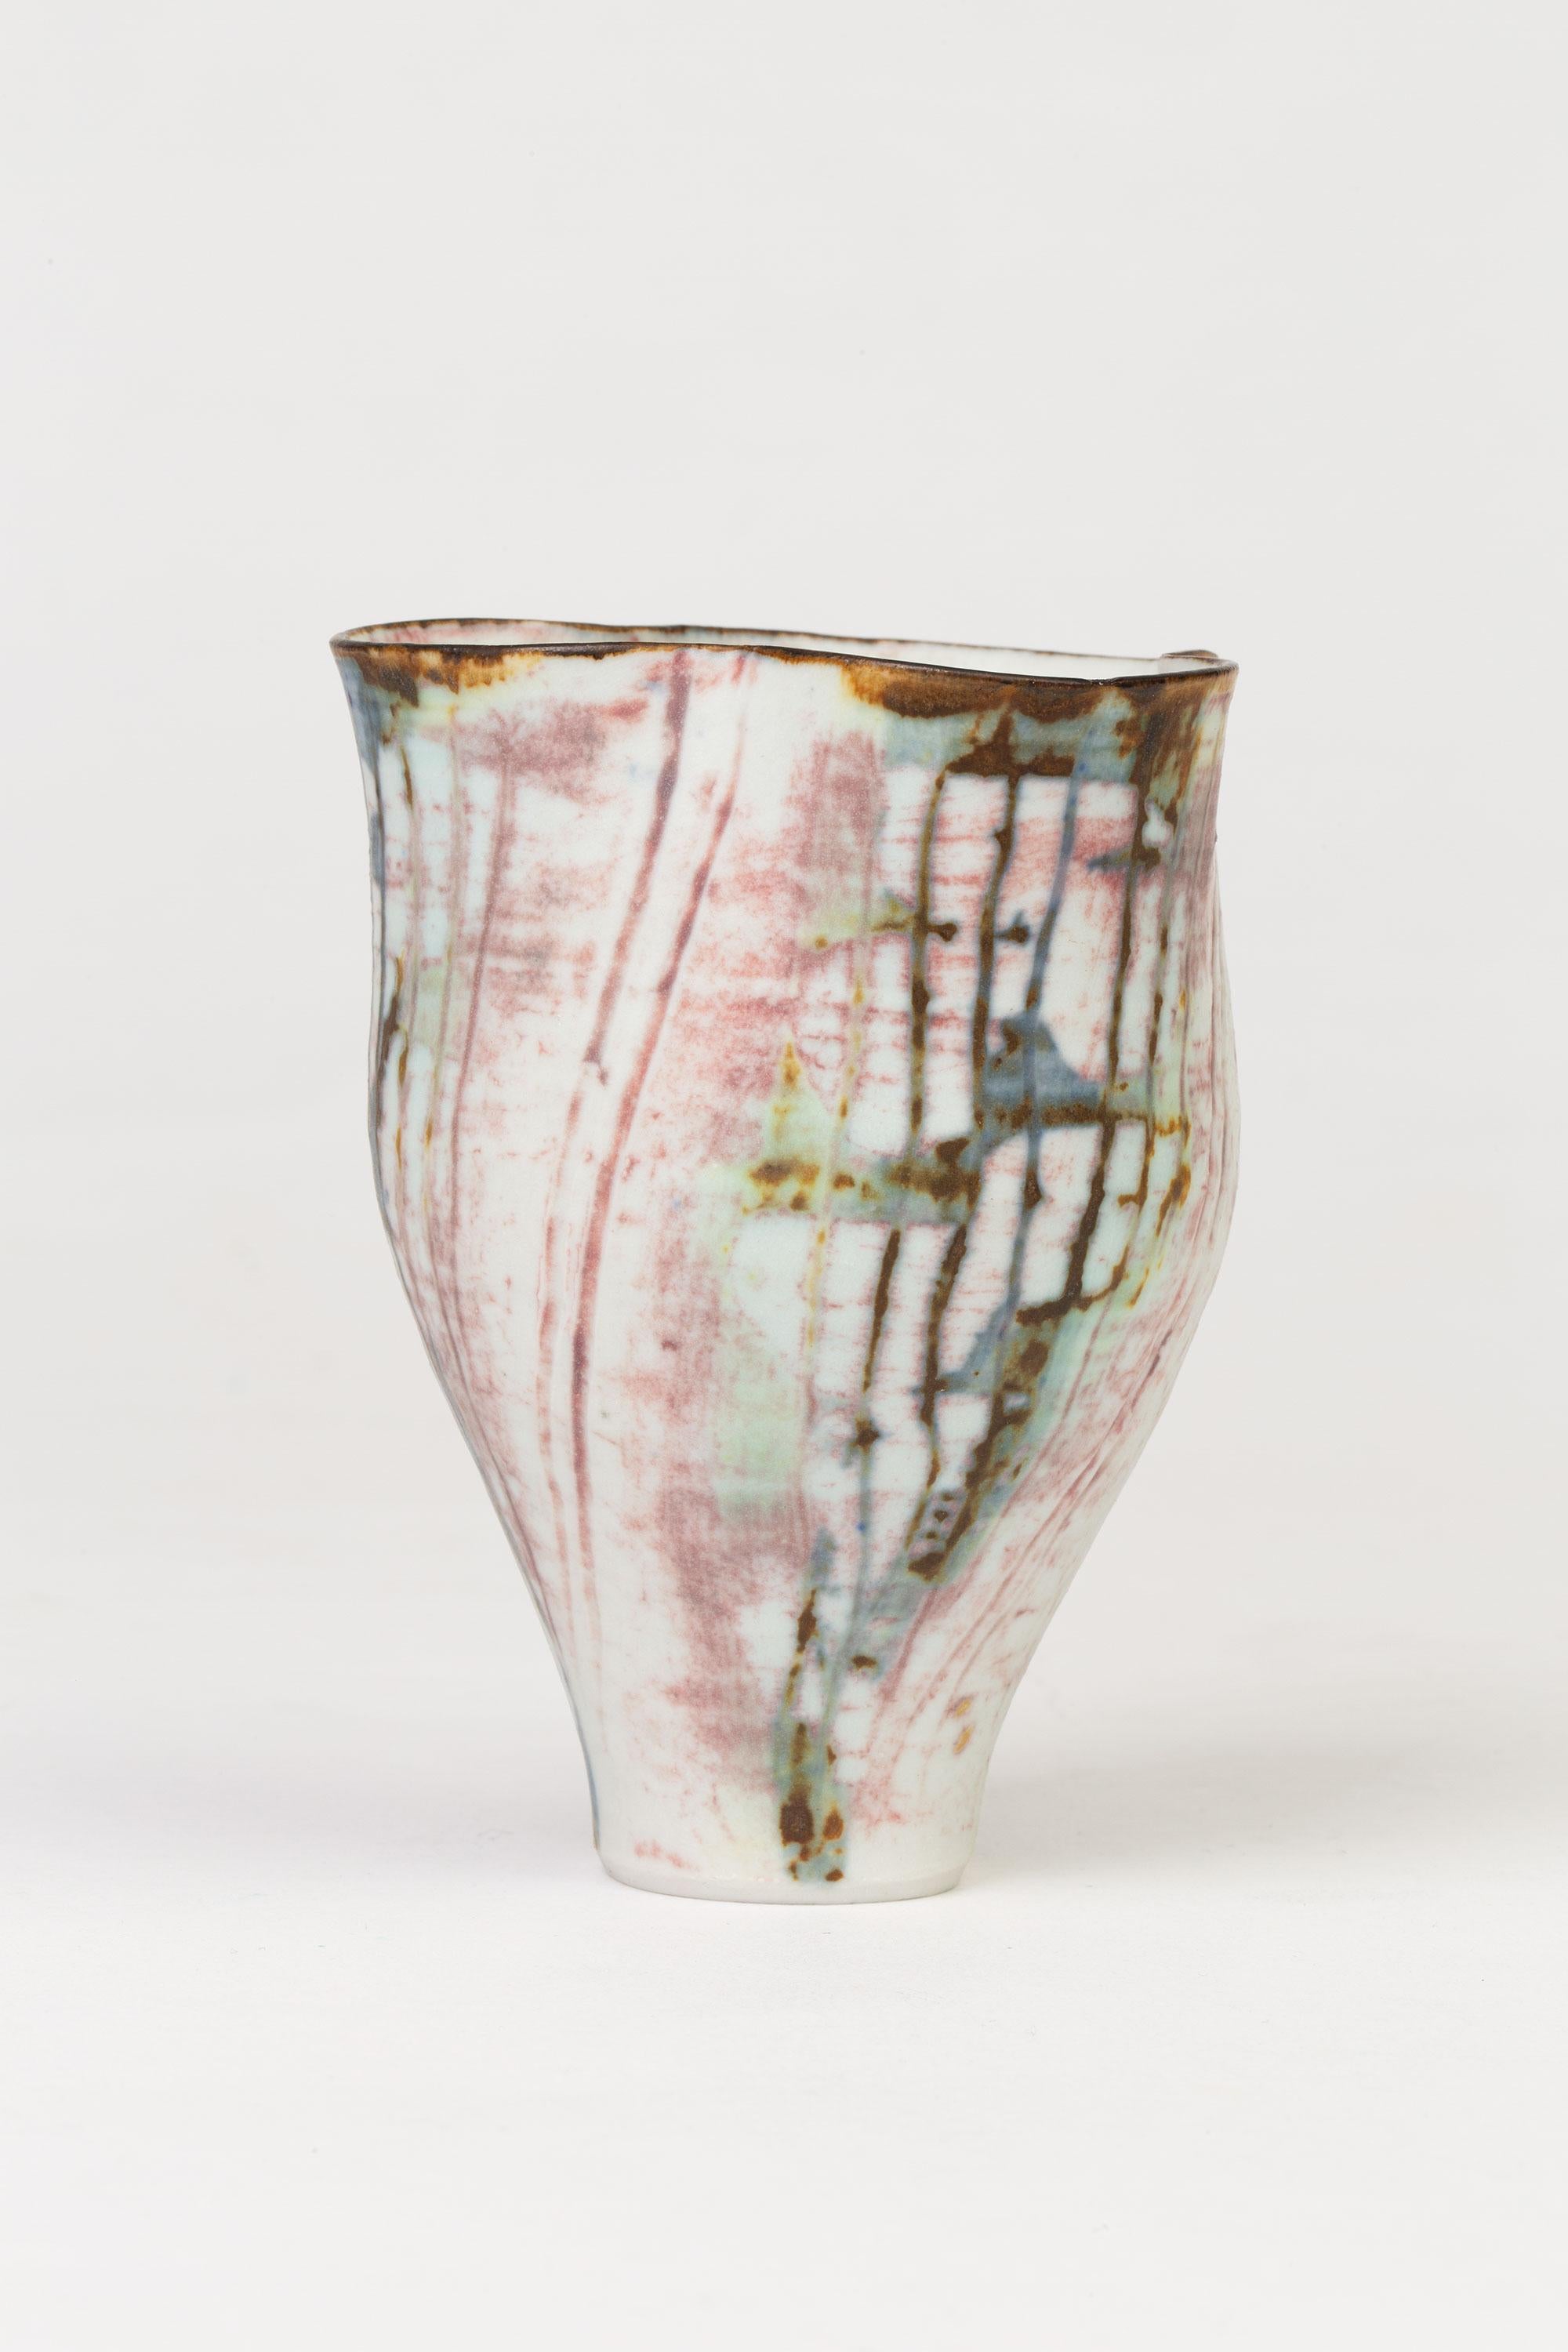 Marianne De Trey Studio Porcelain Wax Resist Linear Patterned Vase 2